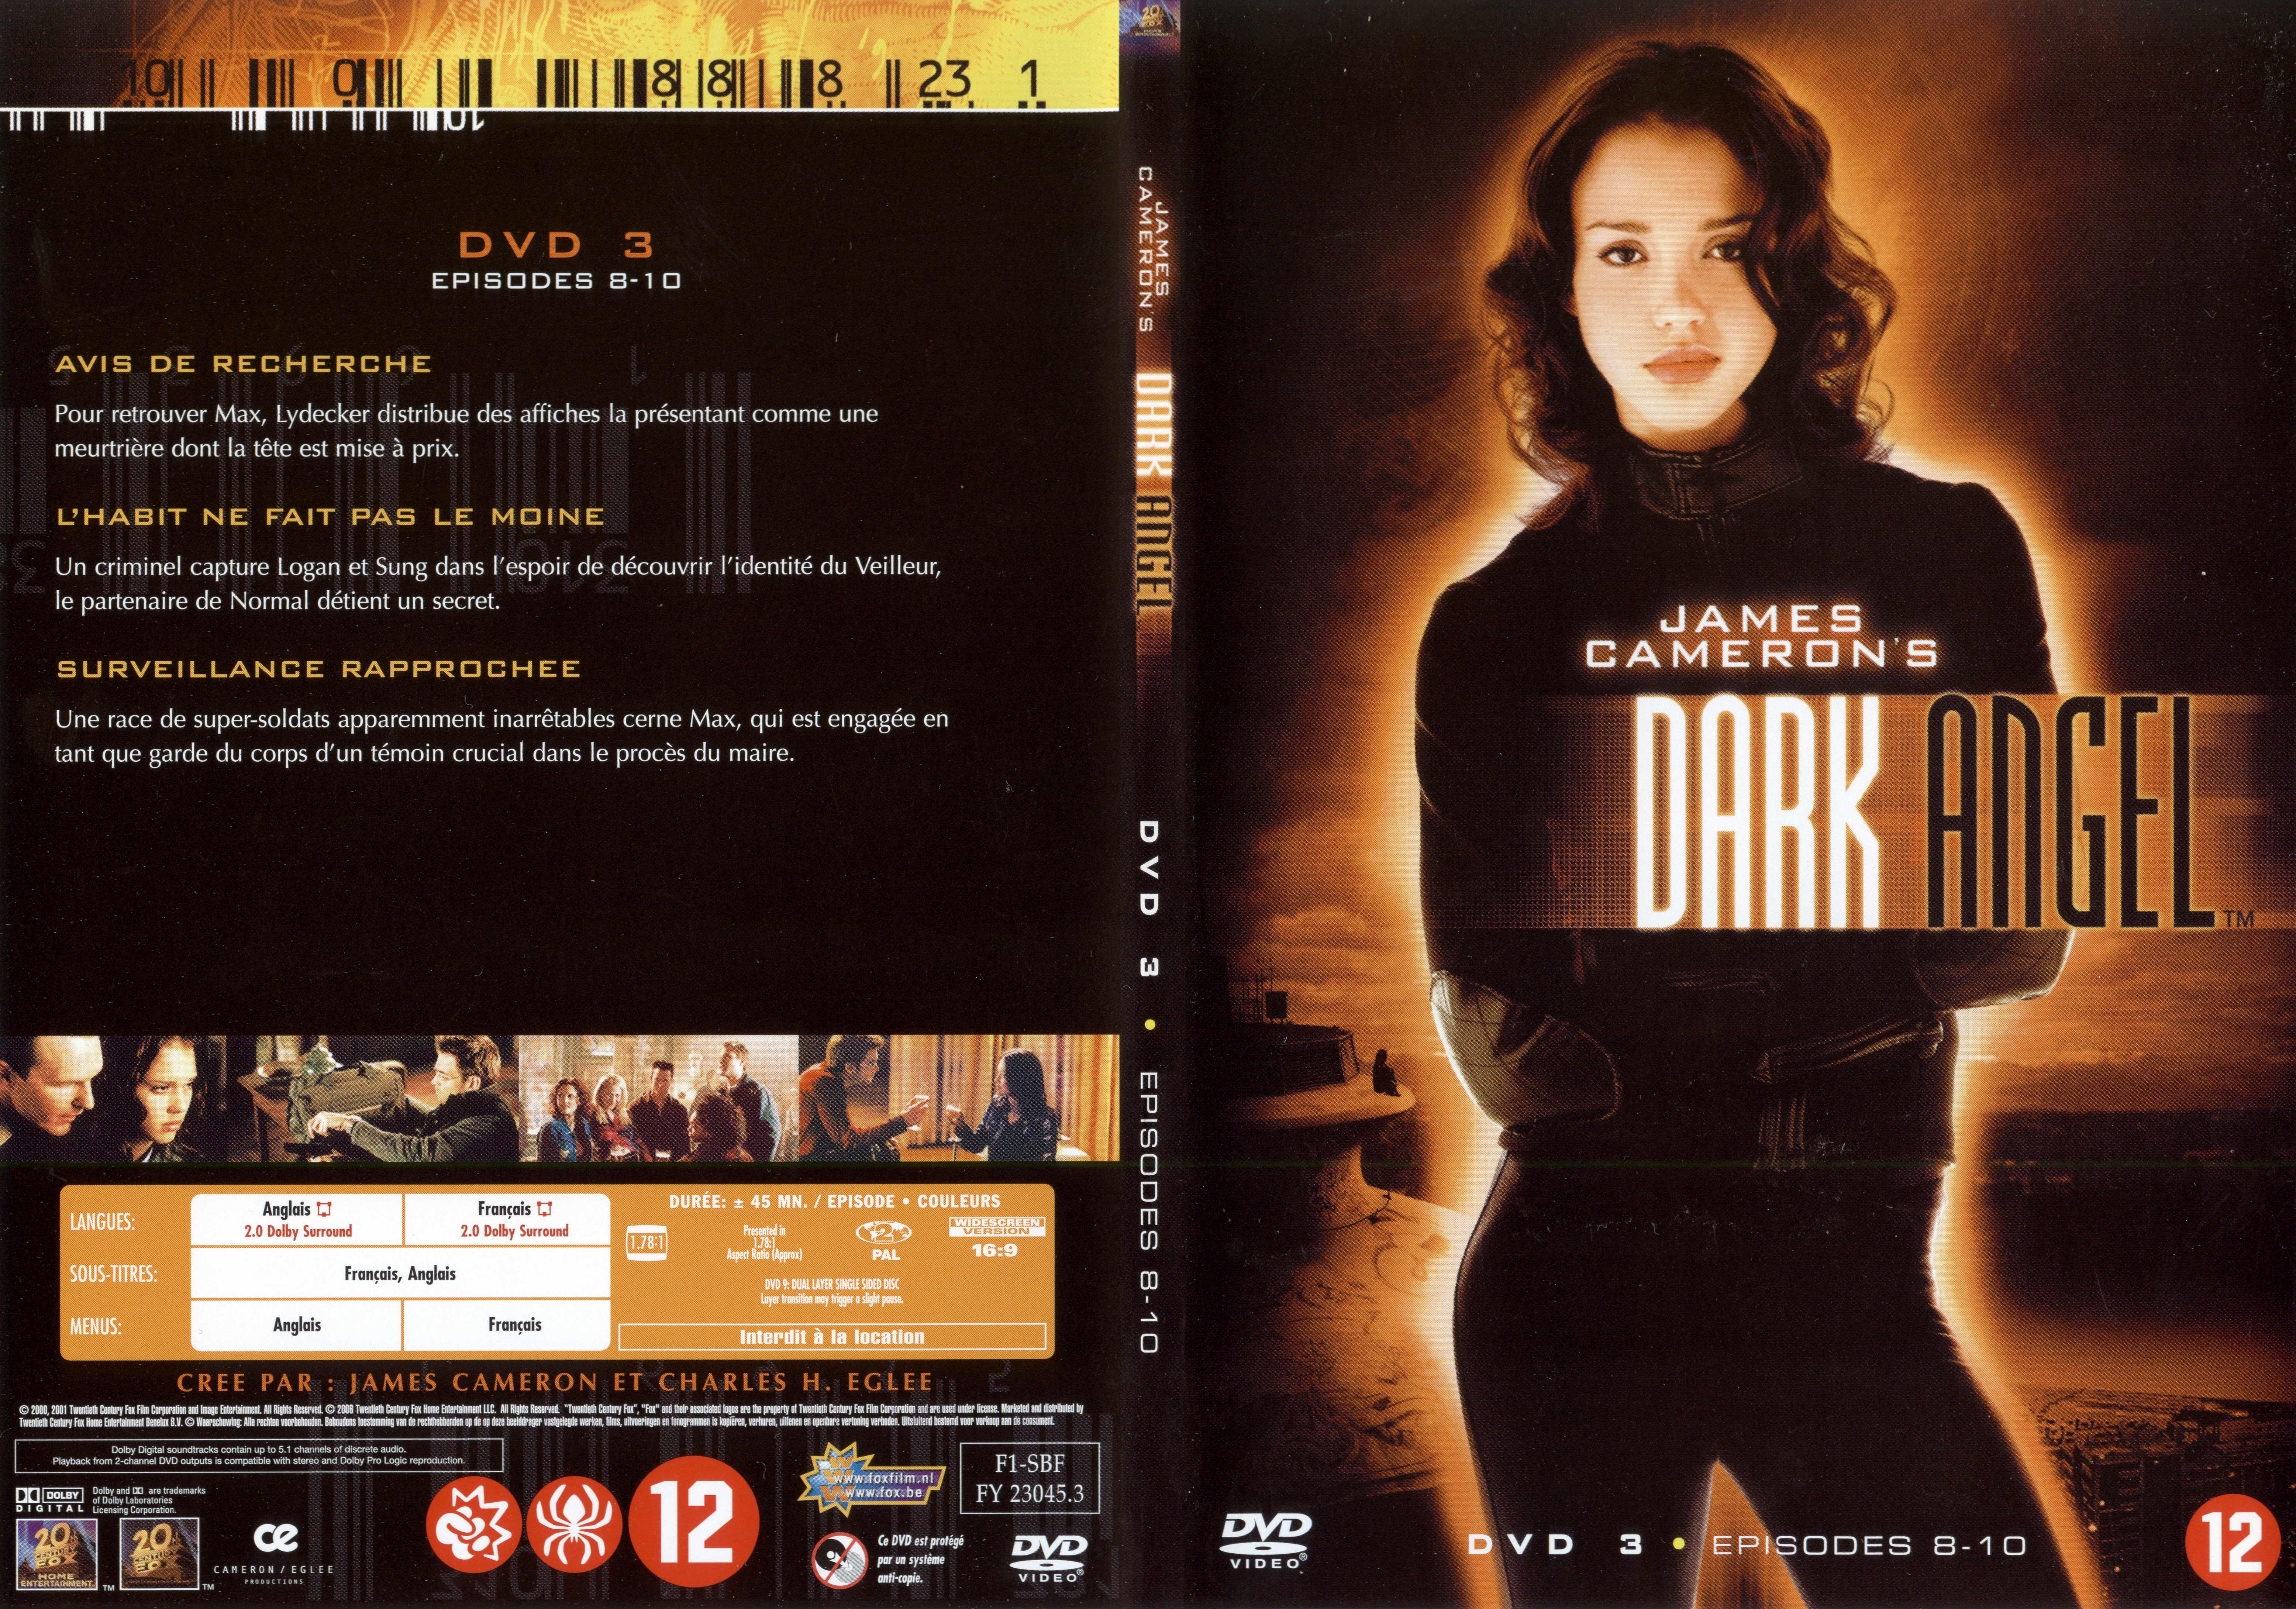 Jaquette DVD Dark Angel Saison 1 DVD 3 v2